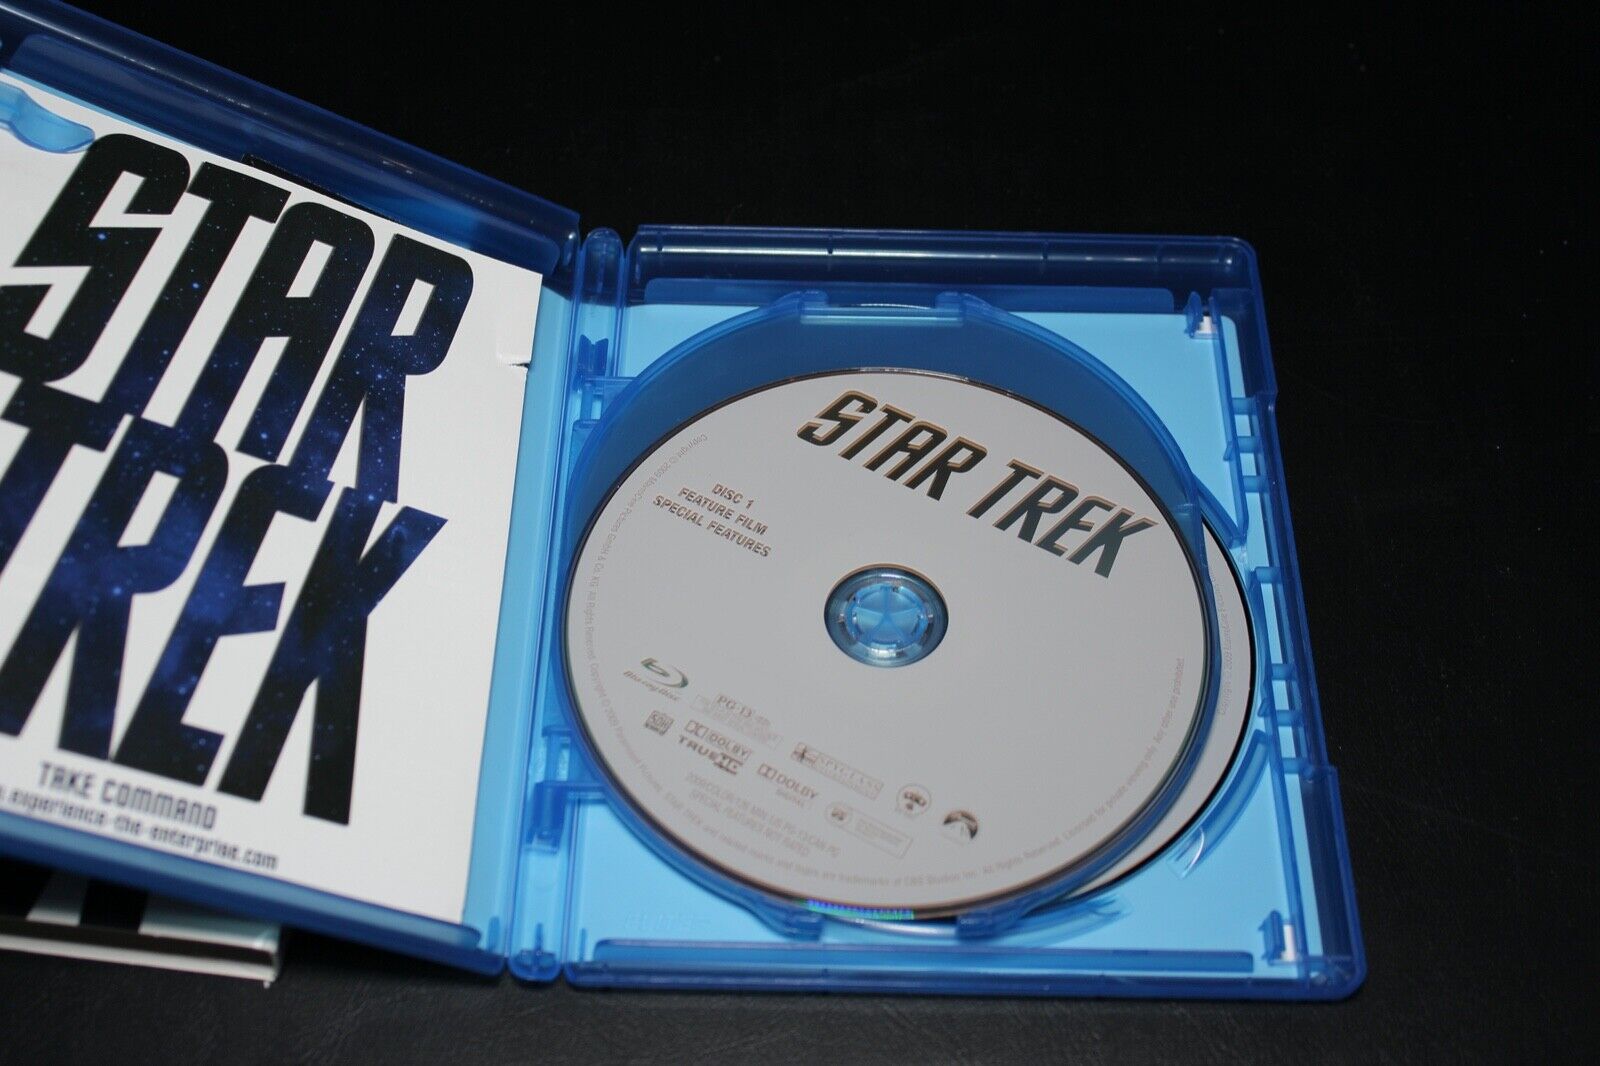 Star Trek (Blu-ray, 2009, 3-Disc Set Special Edition w/ Slipcover)